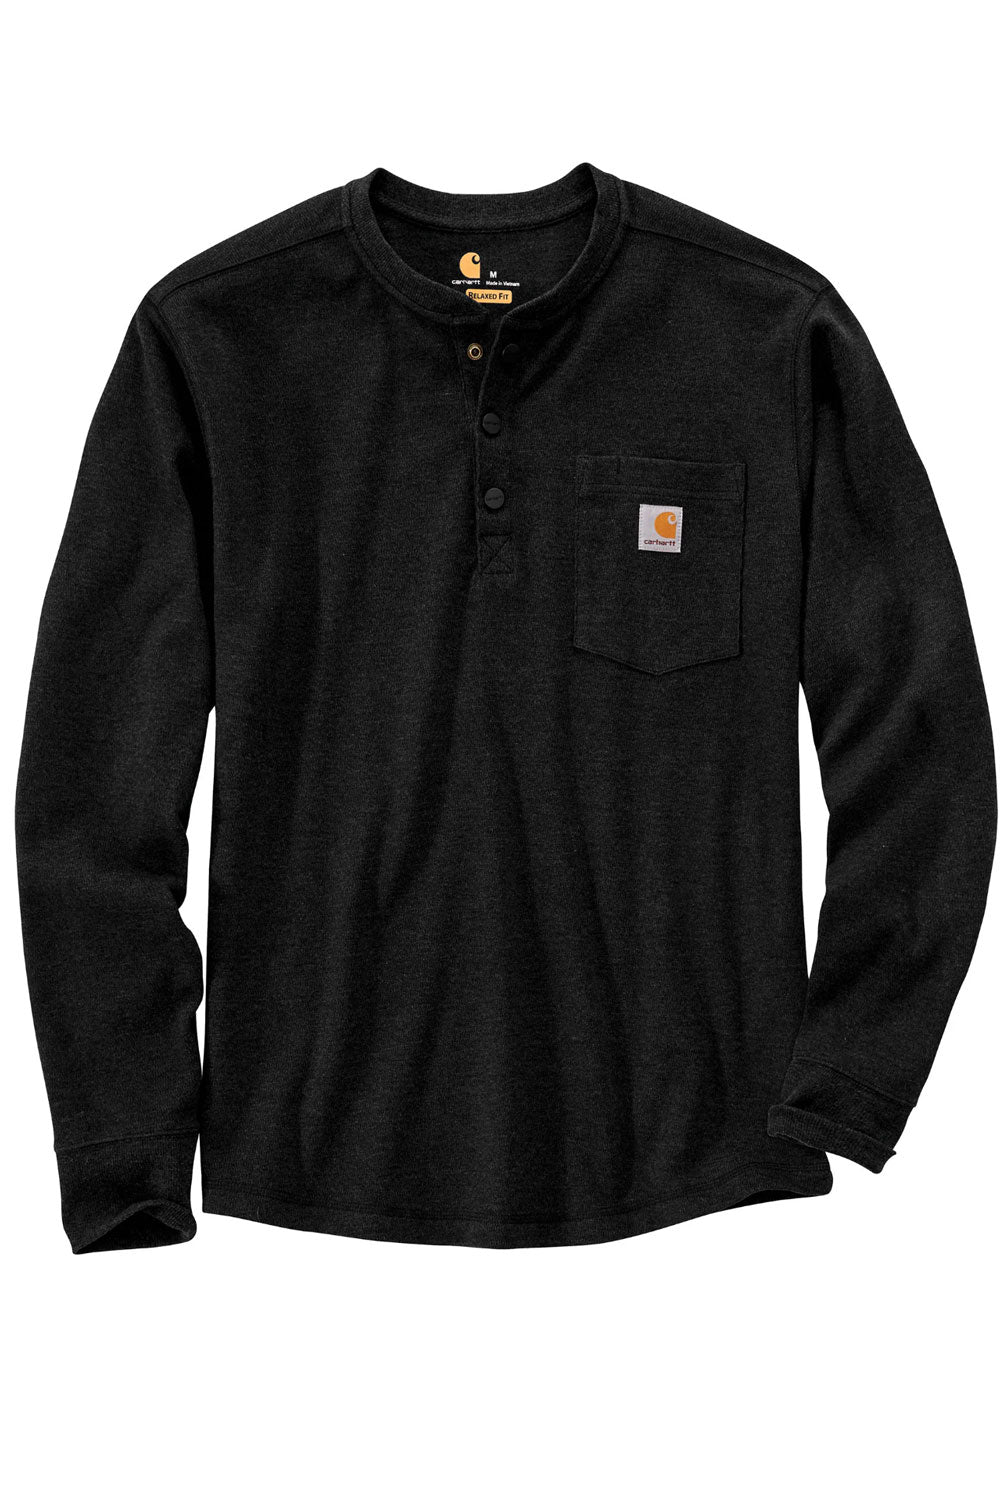 Carhartt Long Sleeve Henley Pocket Thermal Shirt for Men in Black | 10 ...